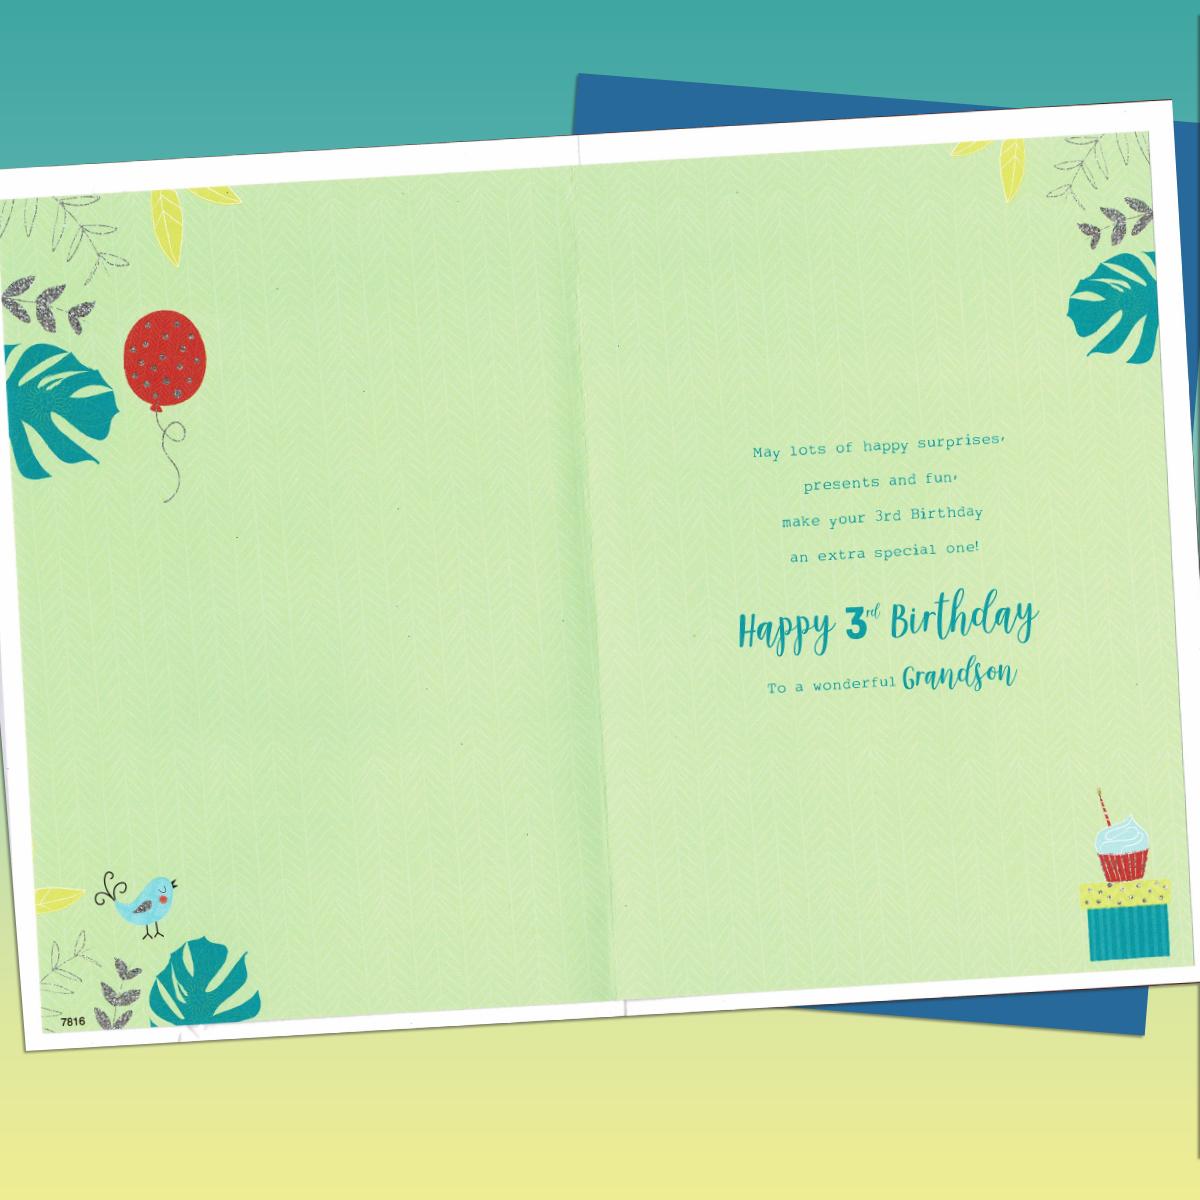 Age 3 Grandson Birthday Card Alongside Its Blue Envelope